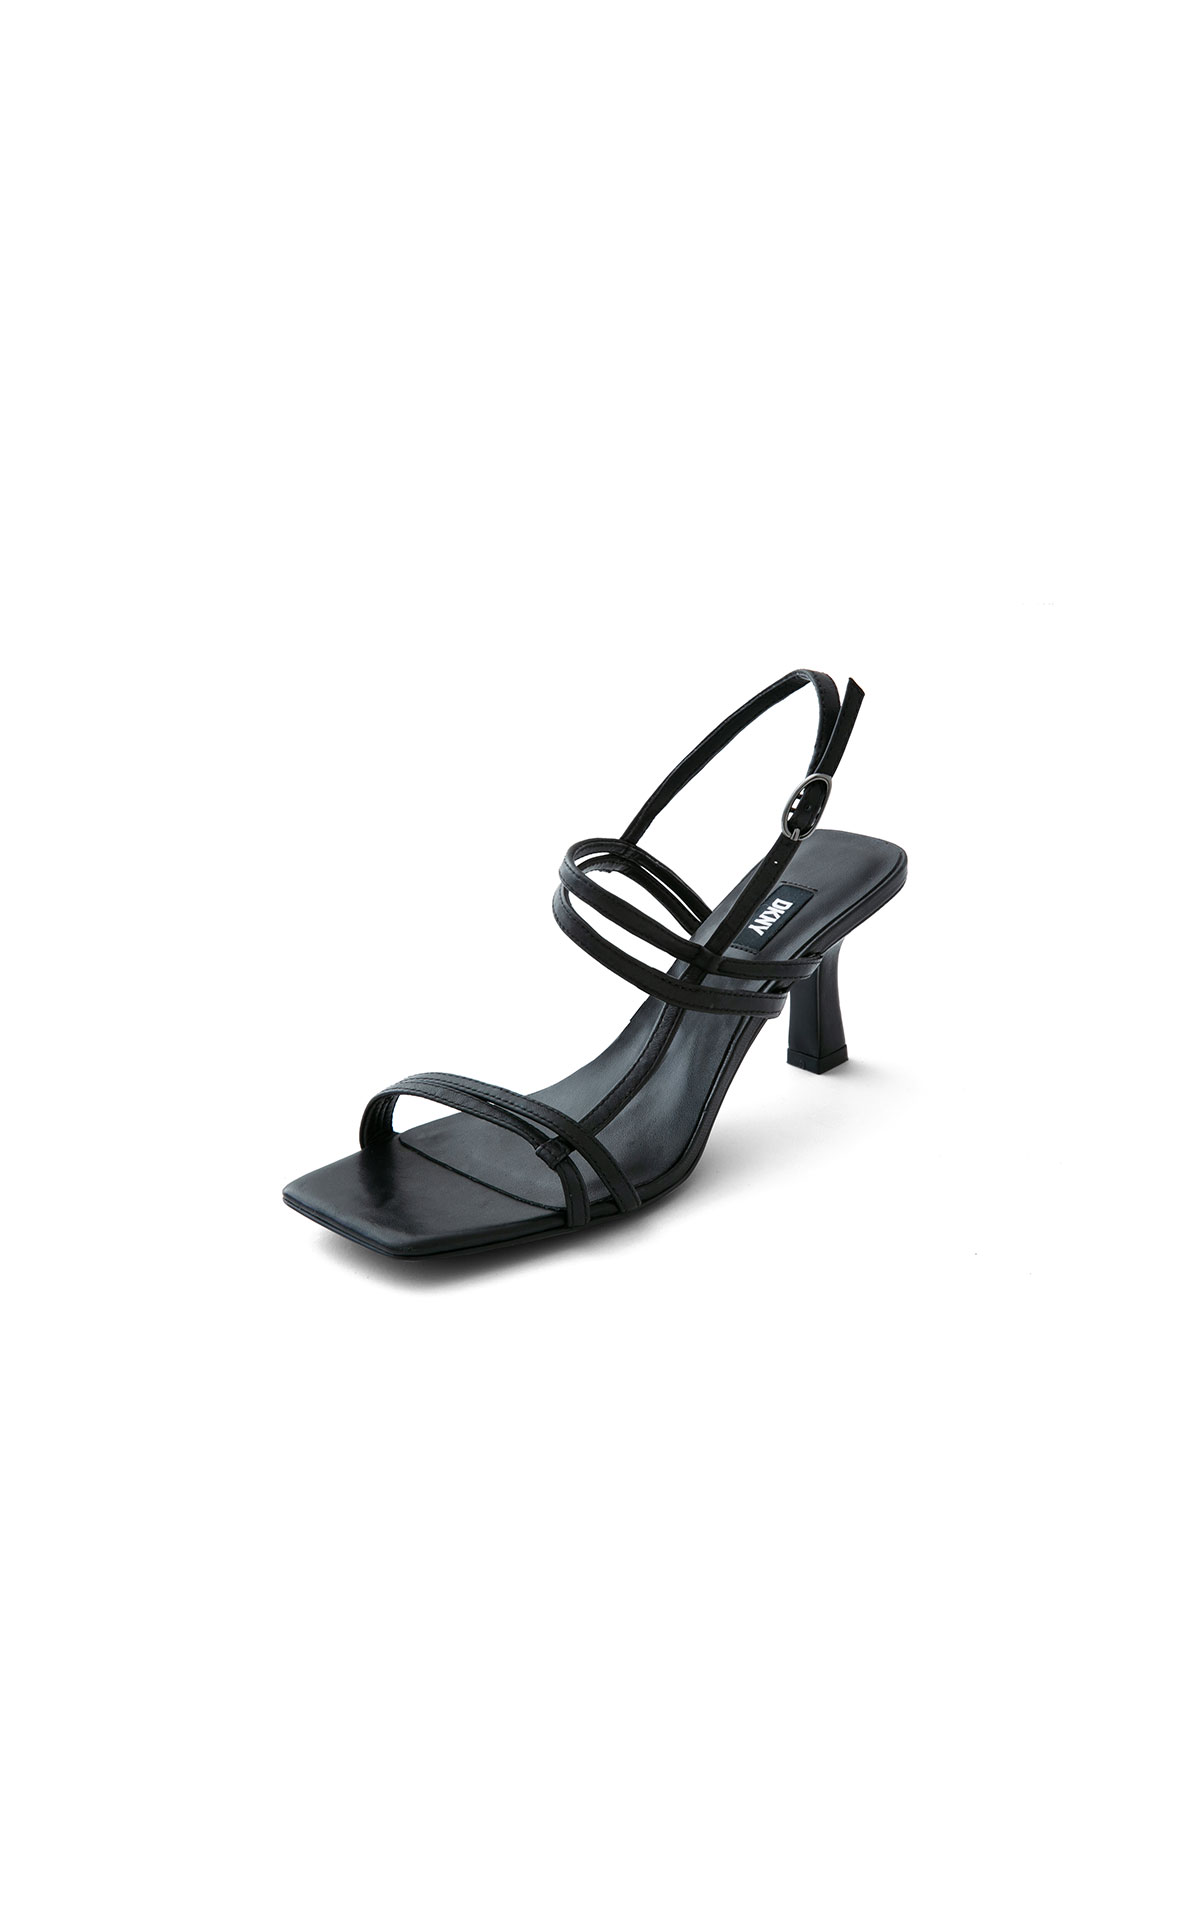 DKNY Bayll sandal from Bicester Village